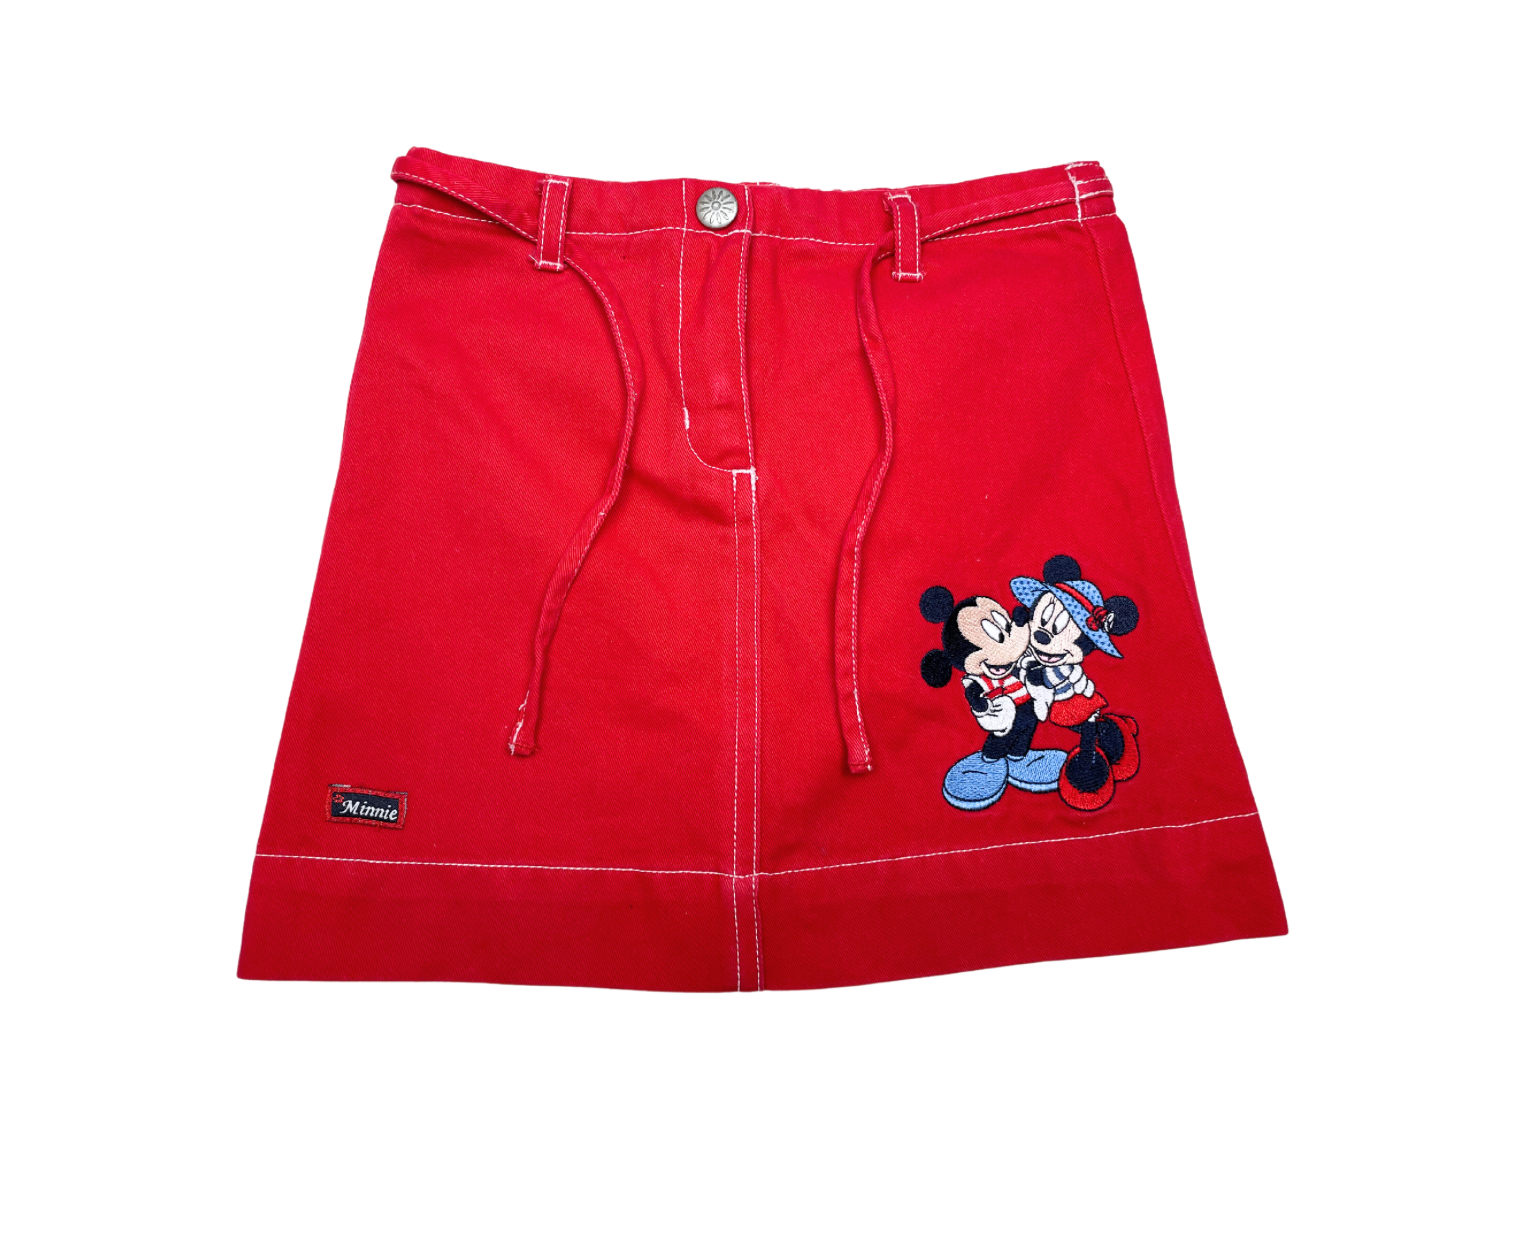 VINTAGE - Jupe rouge Mickey et Minnie - 3/4 ans